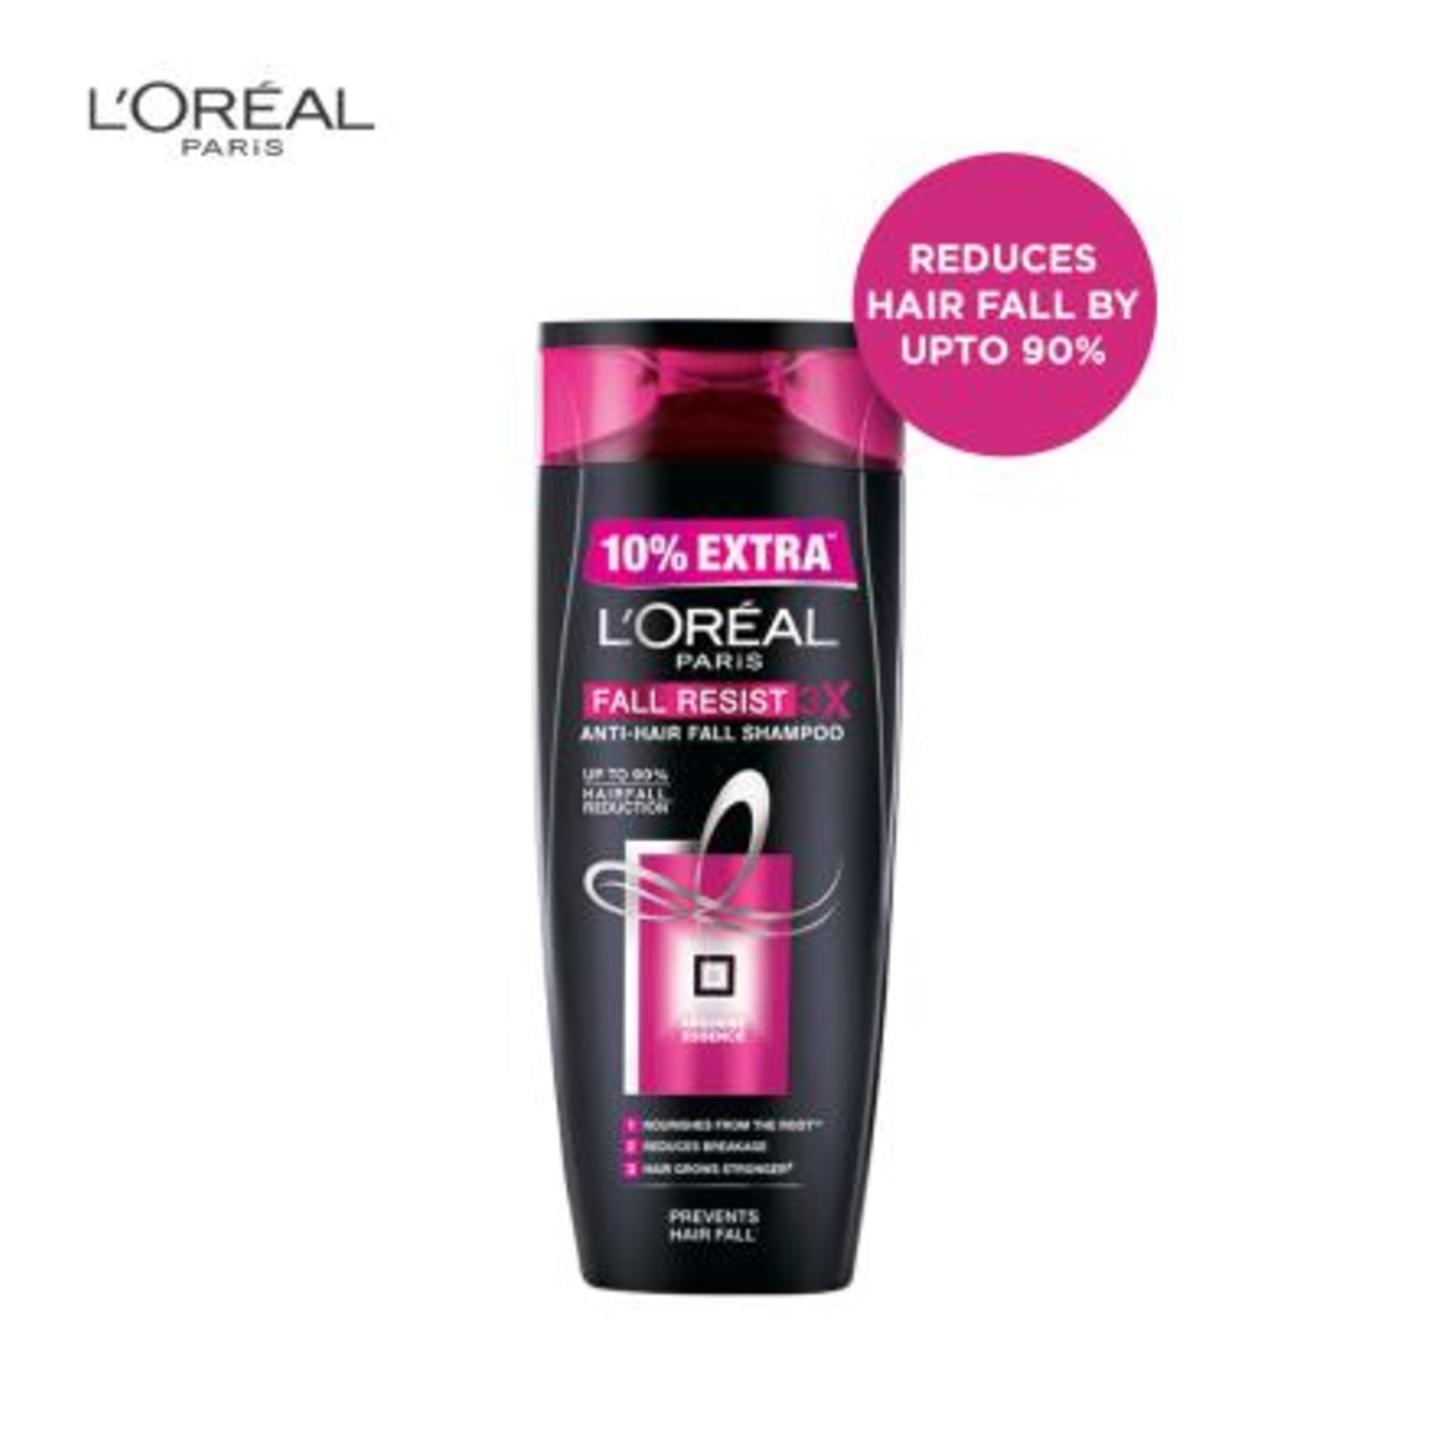 LOreal Paris Fall Resist 3X Repair Anti-Hairfall Shampoo 175 ml With Extra 10 PMBM